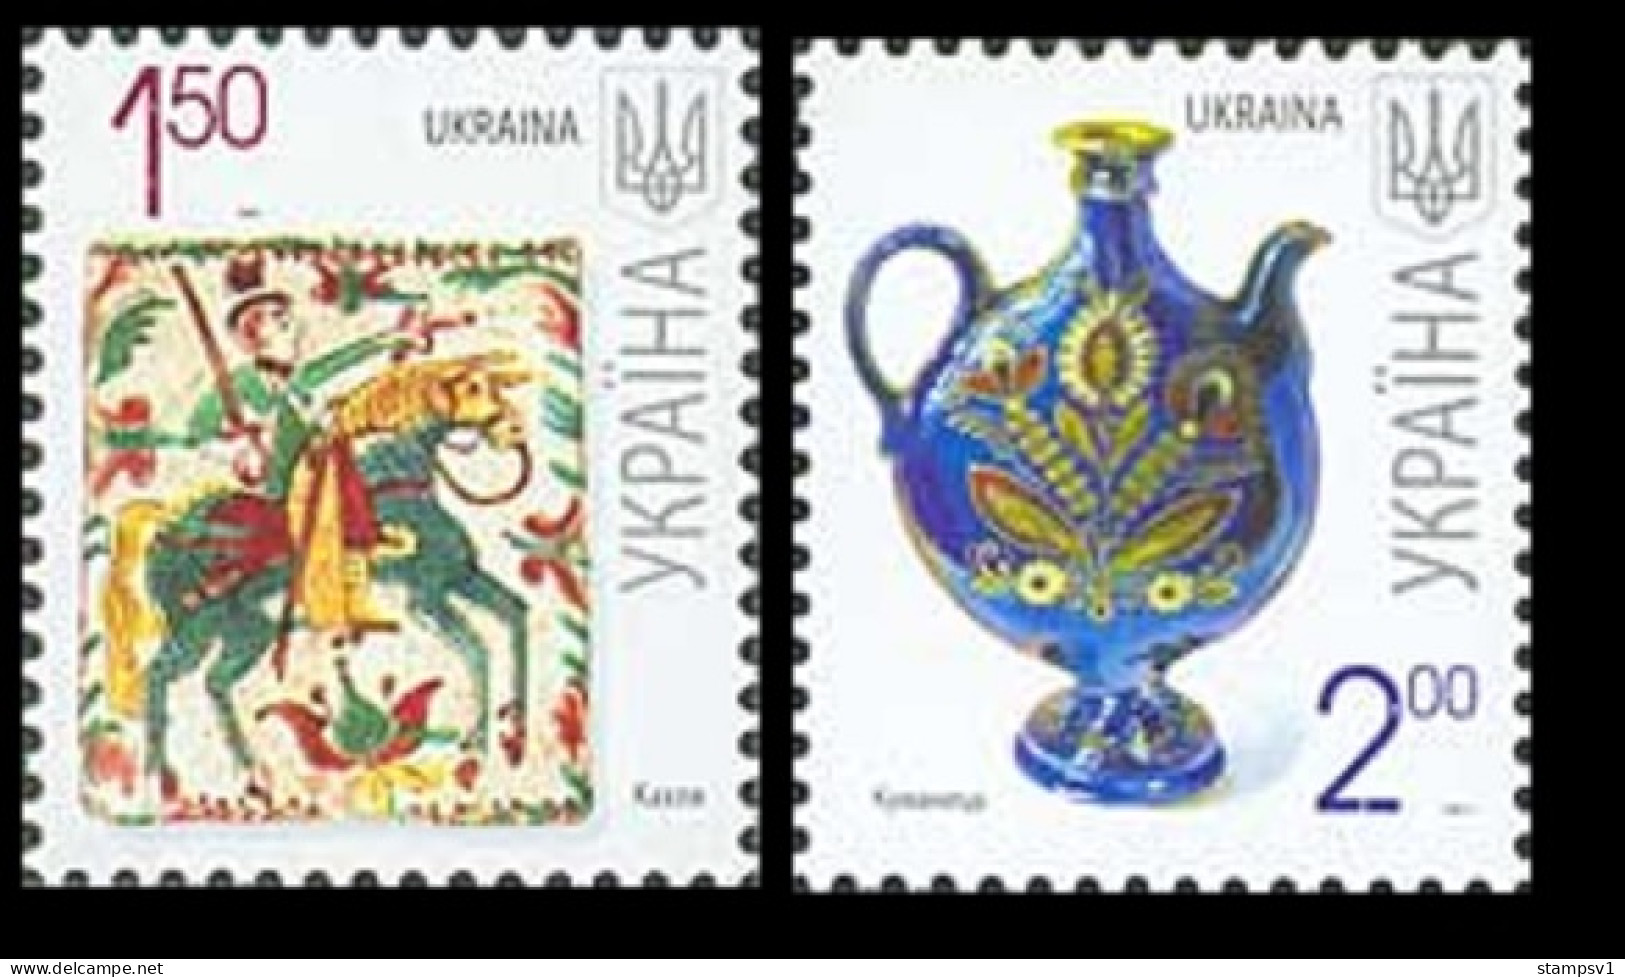 Ukraine 2010 Definitives. 1.50, 2 Gr Date "2010 II" - Ukraine